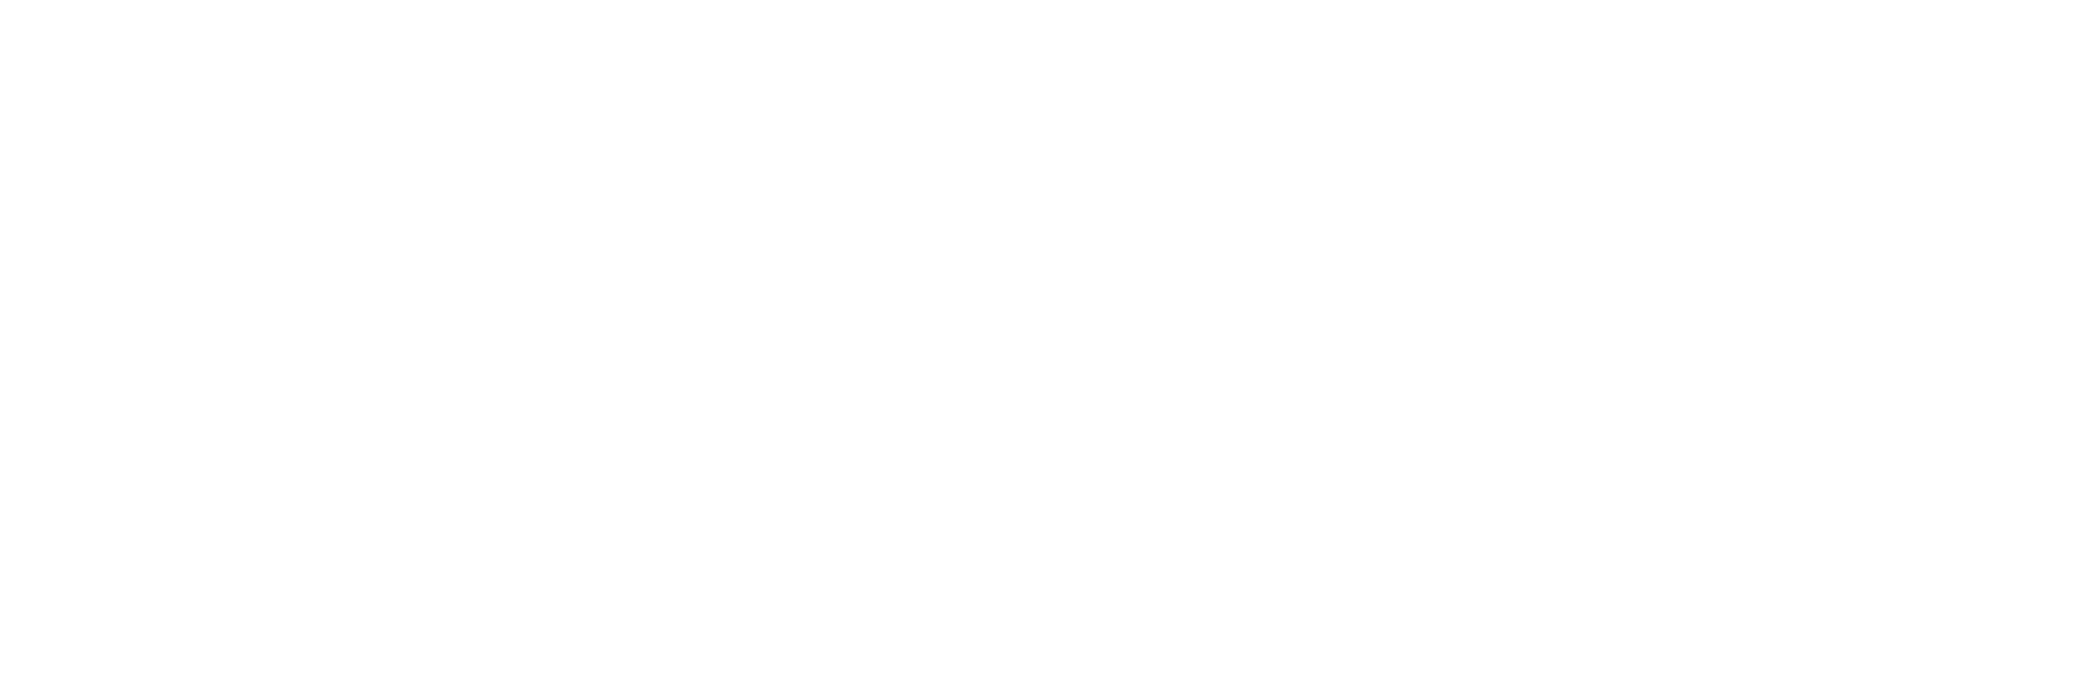 Graylog GO white logo